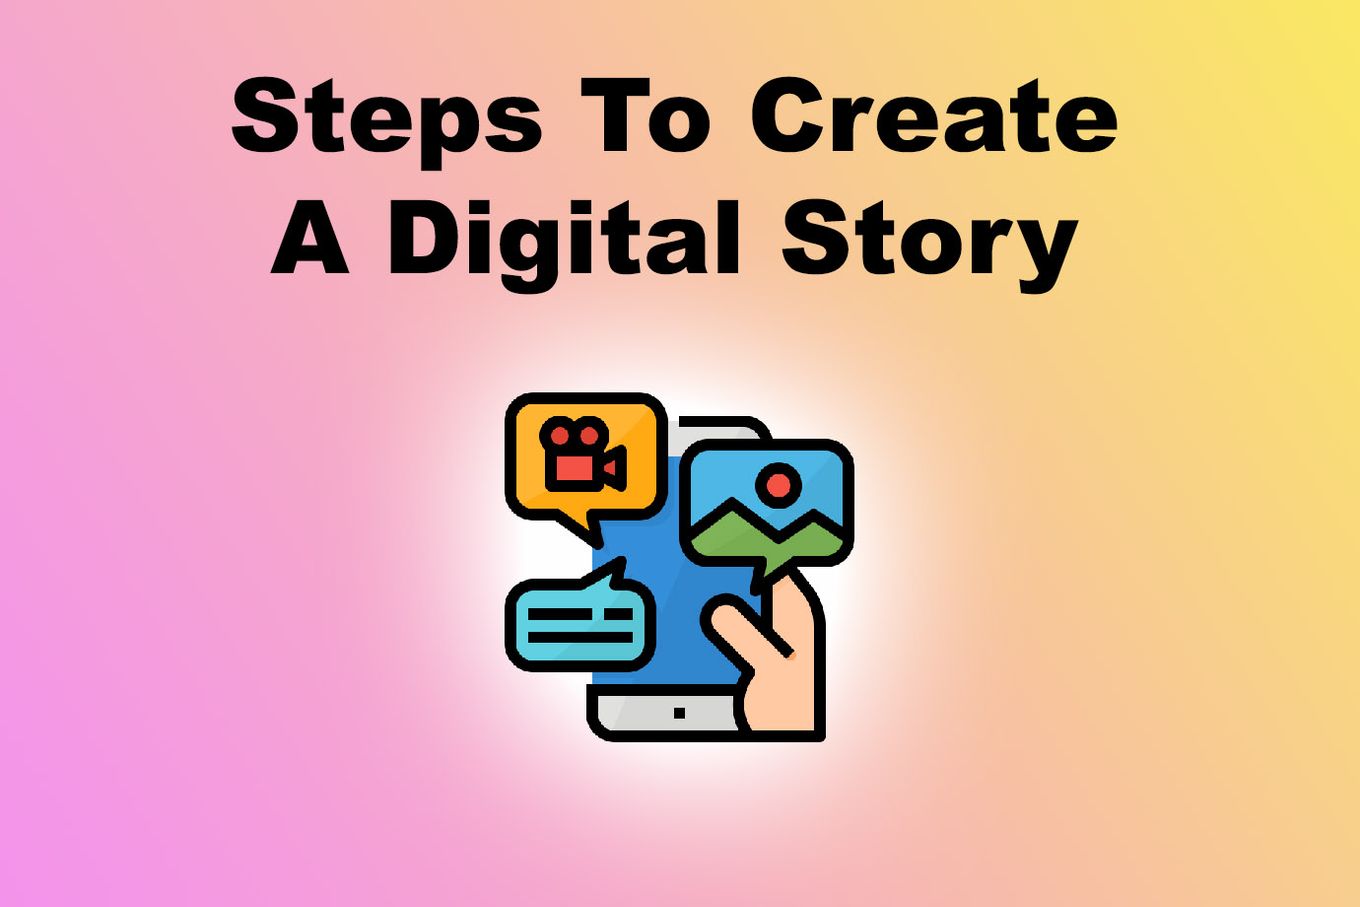 Steps to create a digital story